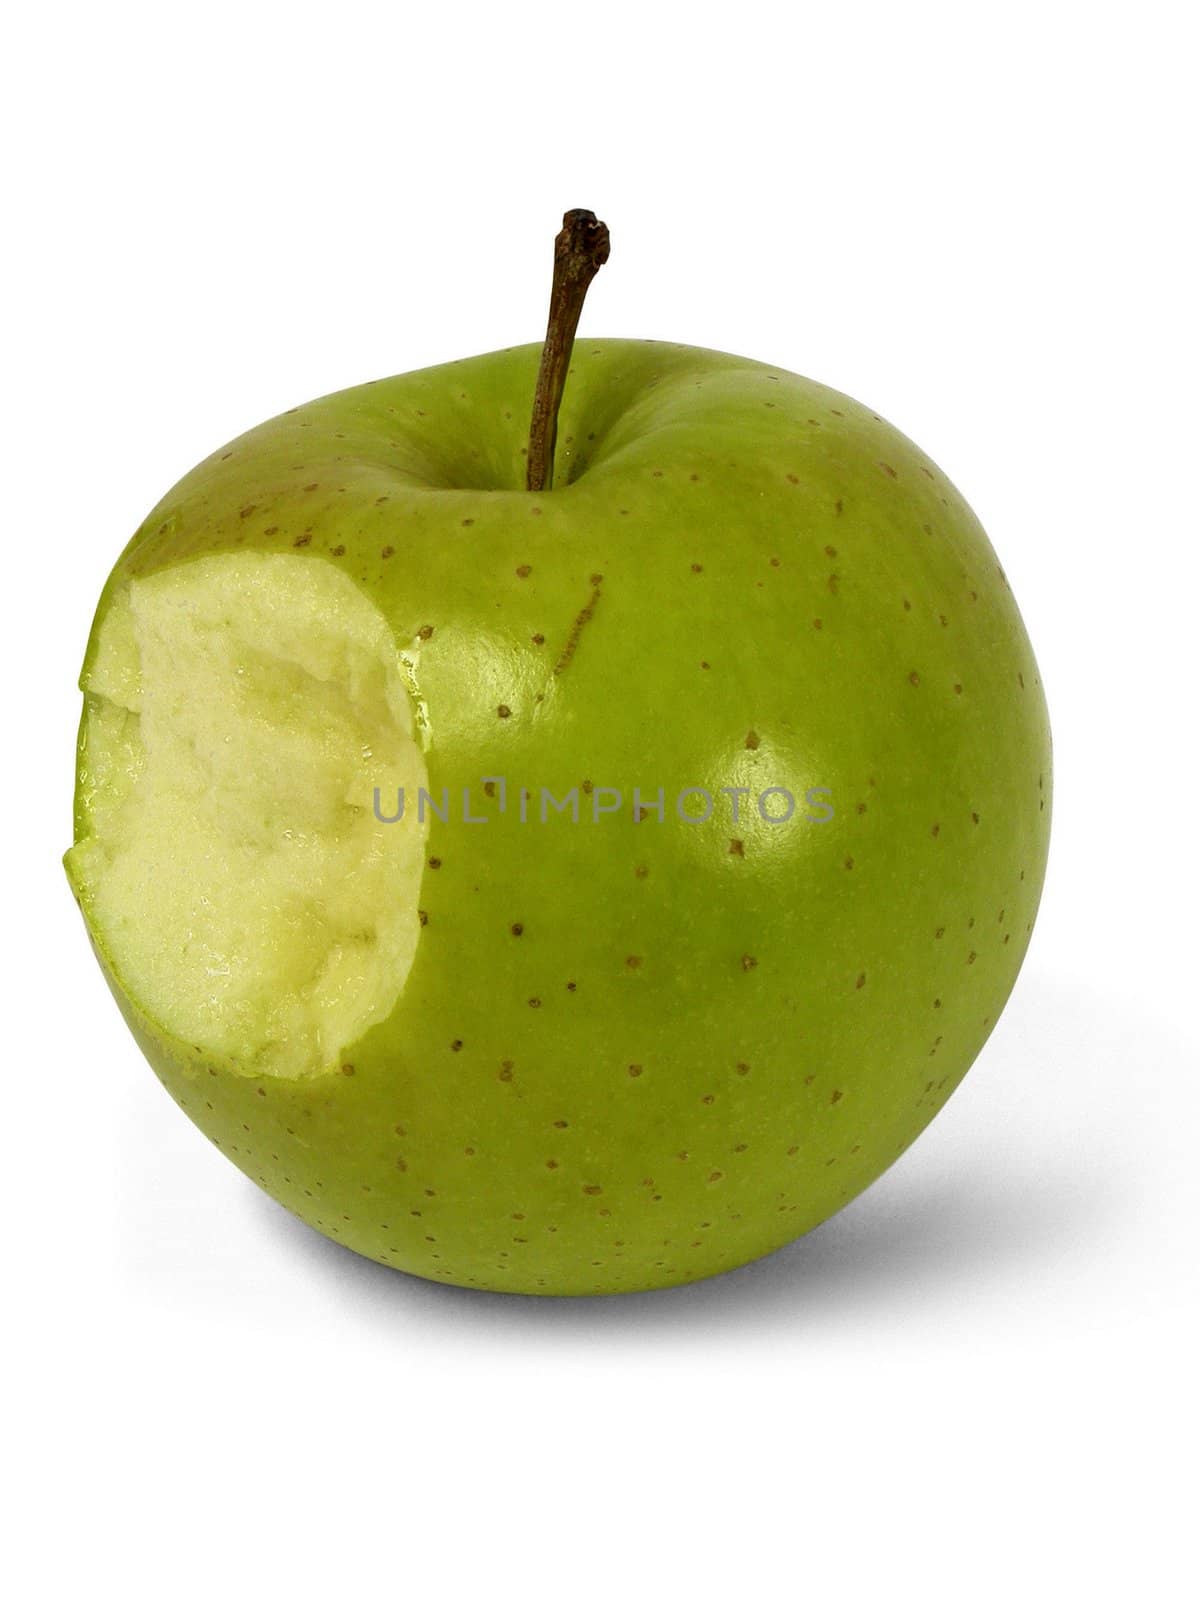 eaten apple by Baltus